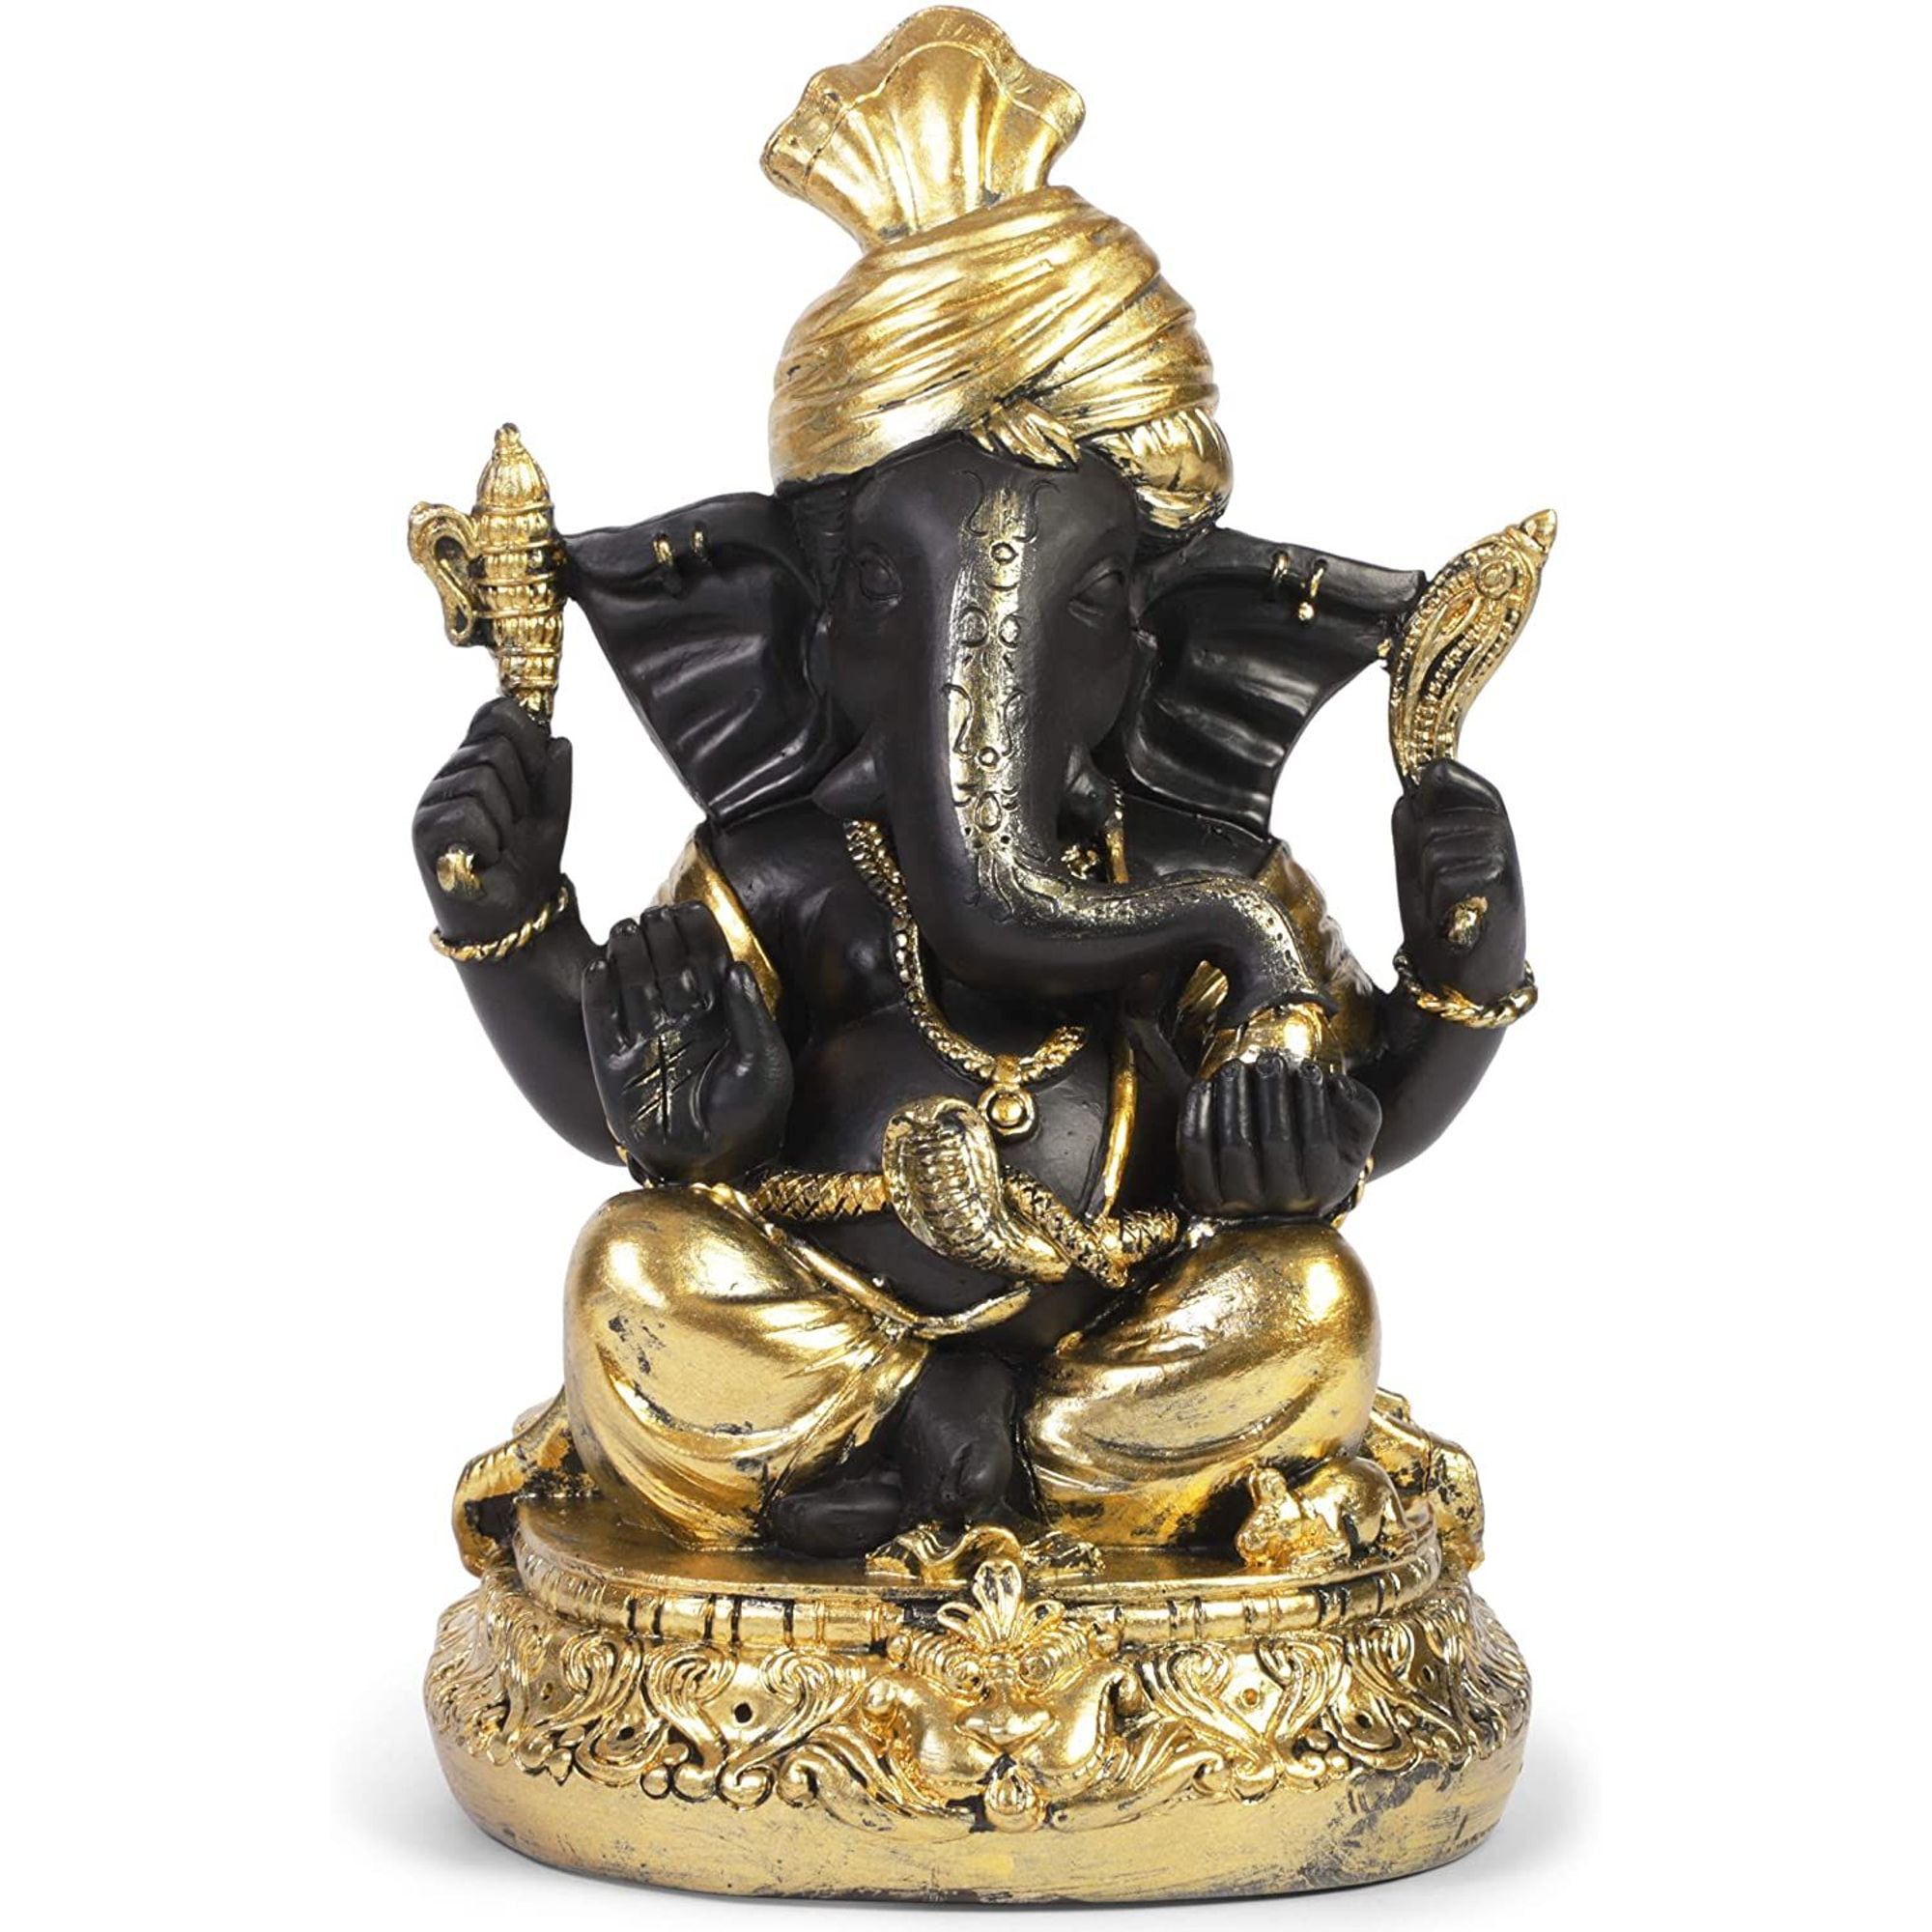 Milisten Resin Ganesh Hidu Elephant Statue Elephant Buddha Figure Statue God of Success Desktop Ornament Decoration for Home Office Car